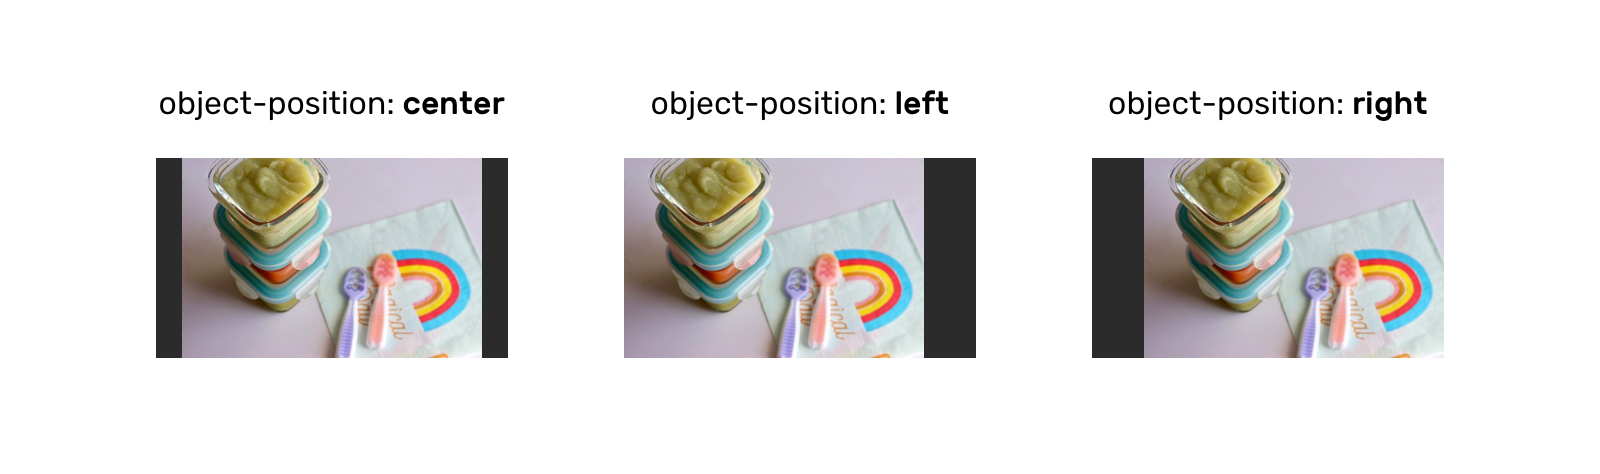 object-position center, left, right